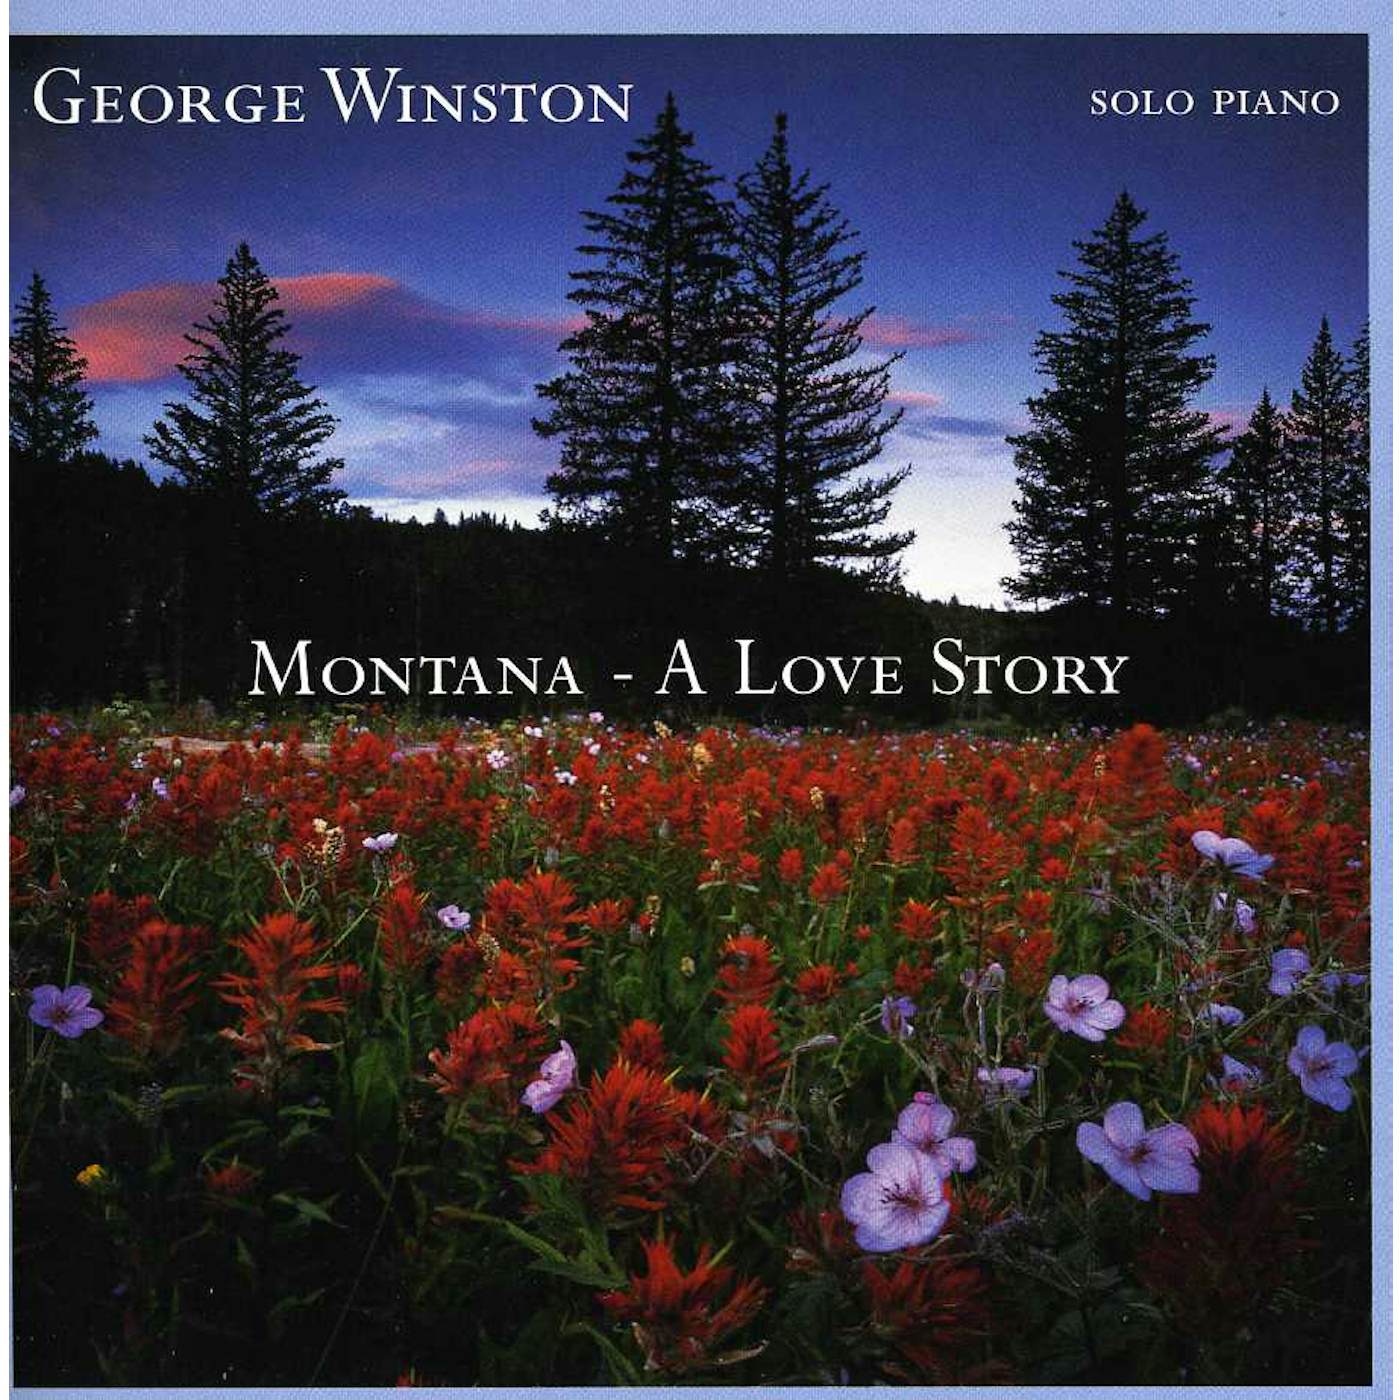 George Winston MONTANA: A LOVE STORY CD